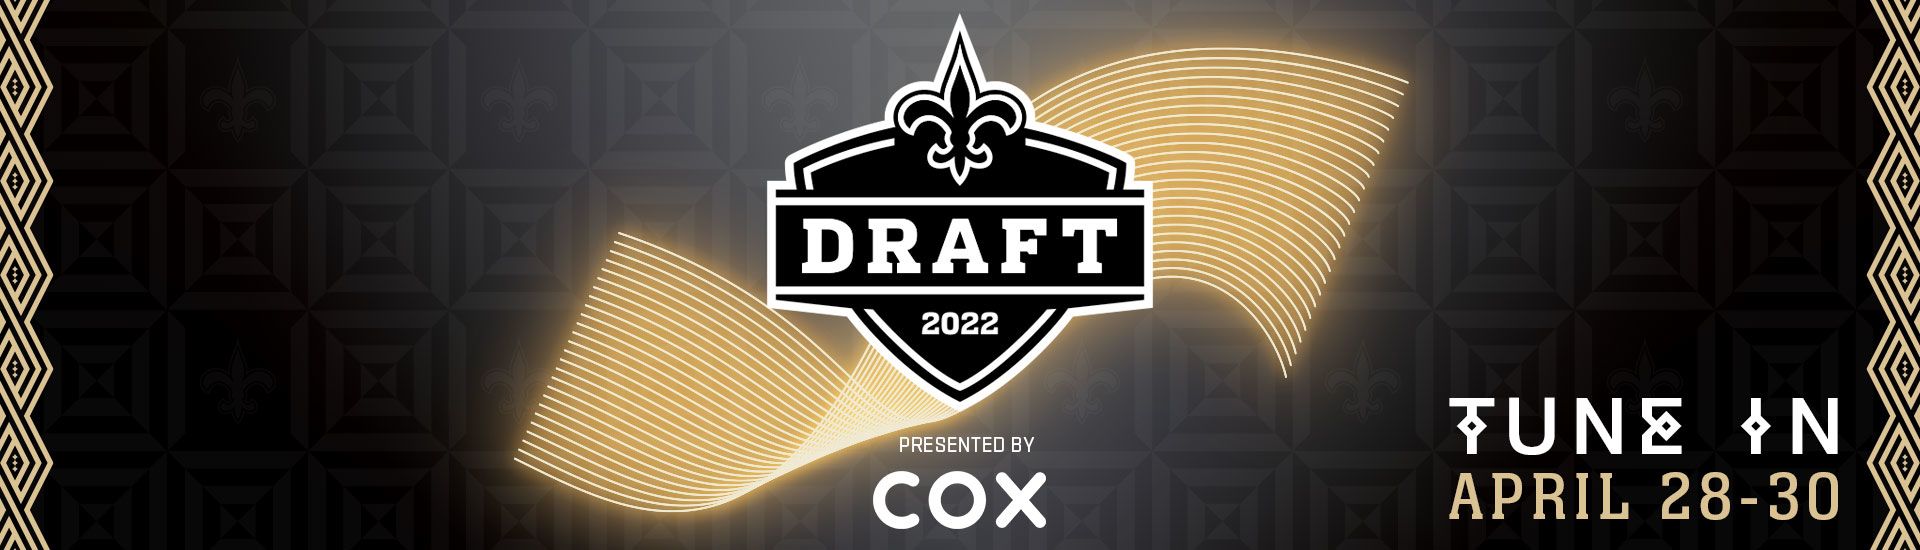 2022 New Orleans Saints NFL Draft